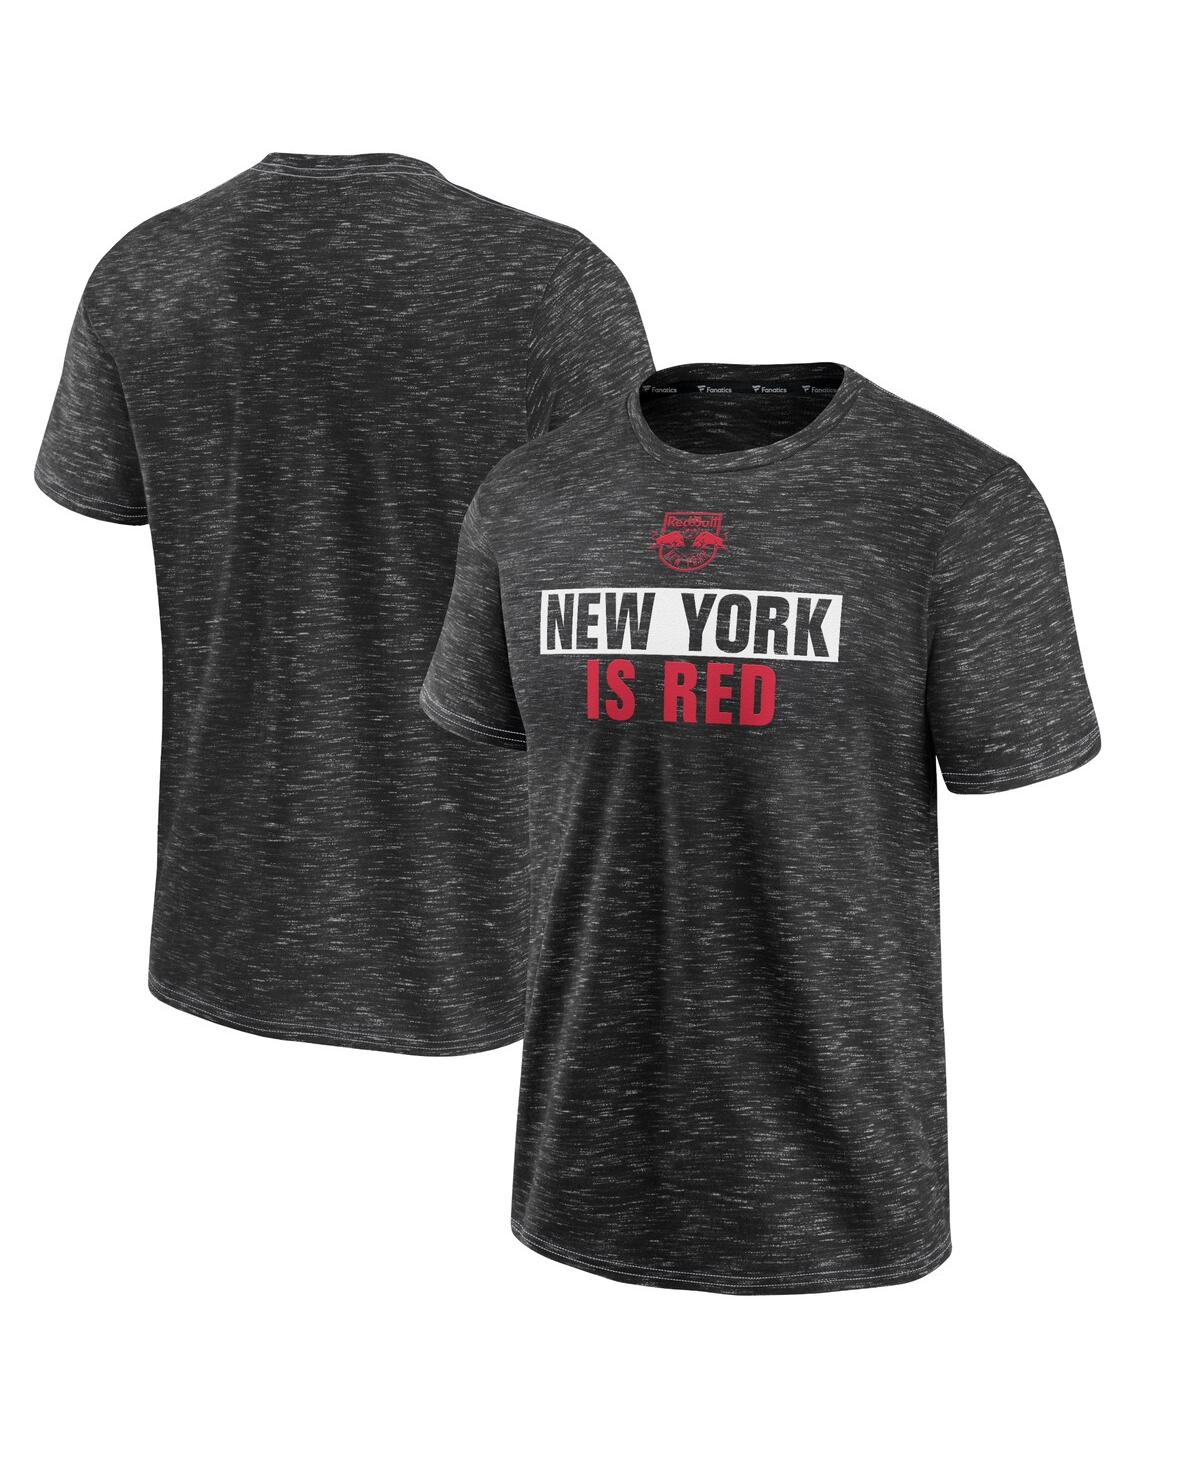 Men's Fanatics Charcoal New York Red Bulls T-shirt - Charcoal